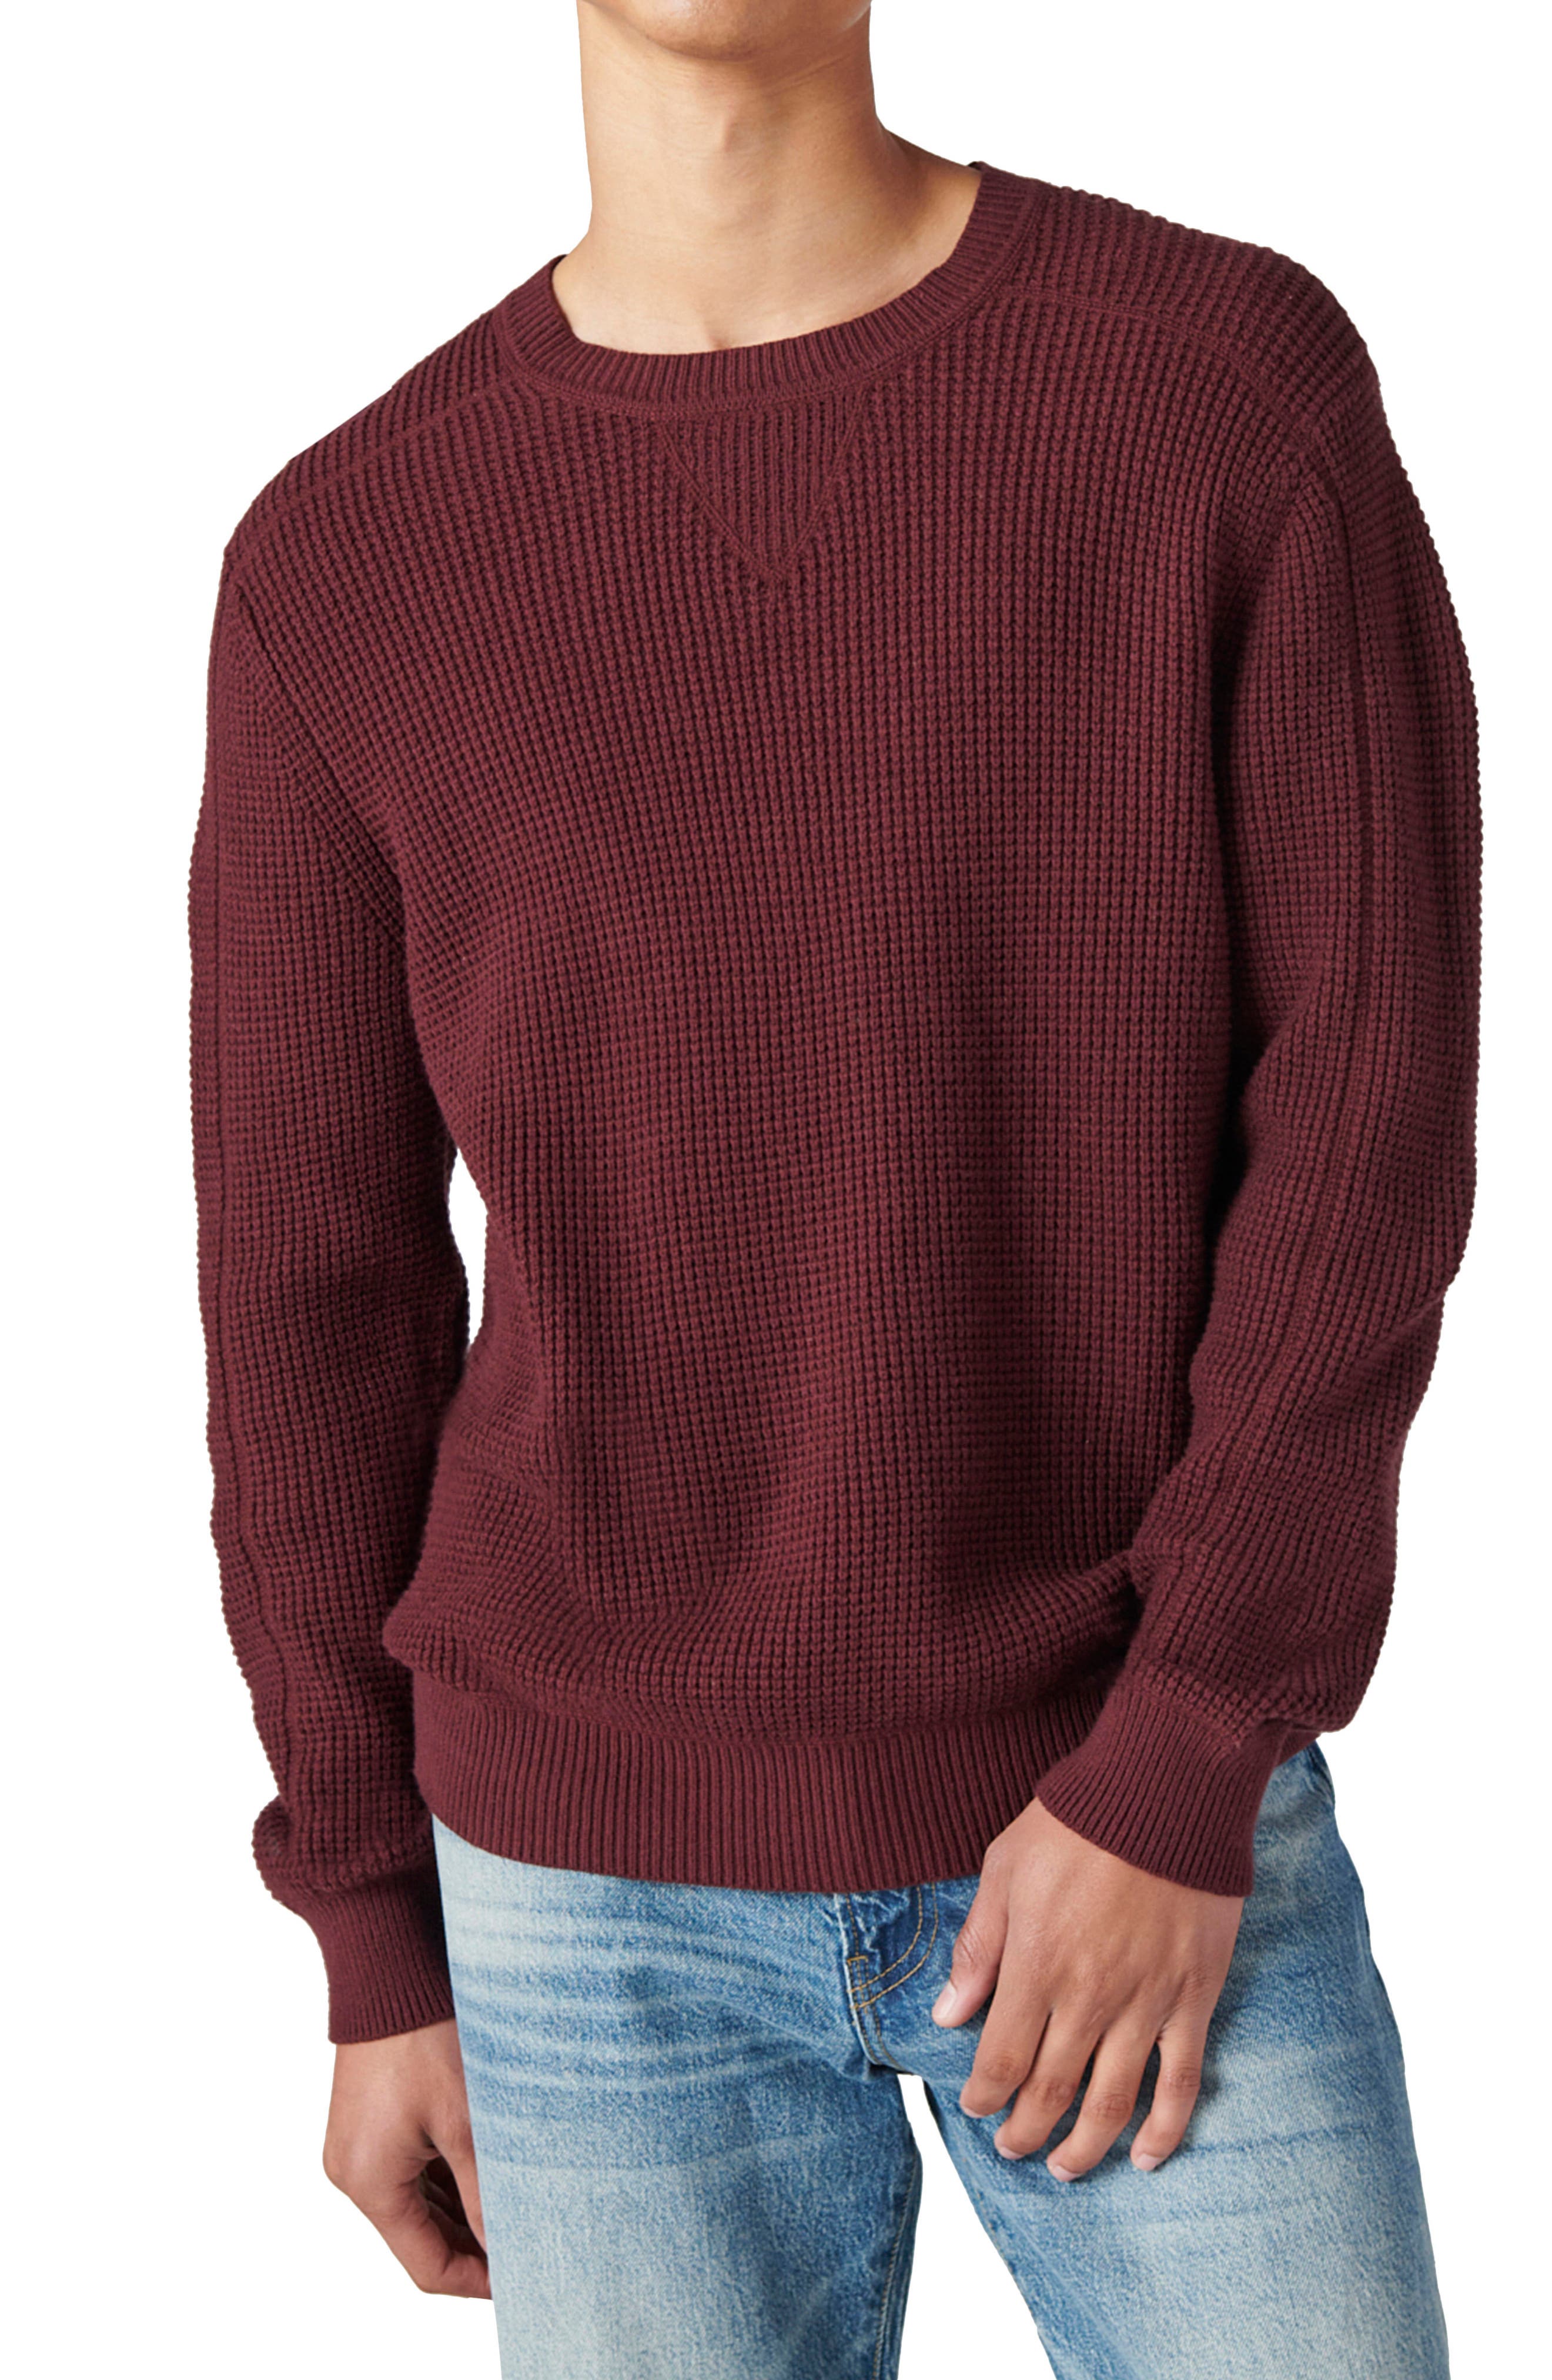 Men's Sweater Knitted Sweatshirt Long Sleeve Crew Neck Pullover Tops Jumper CA